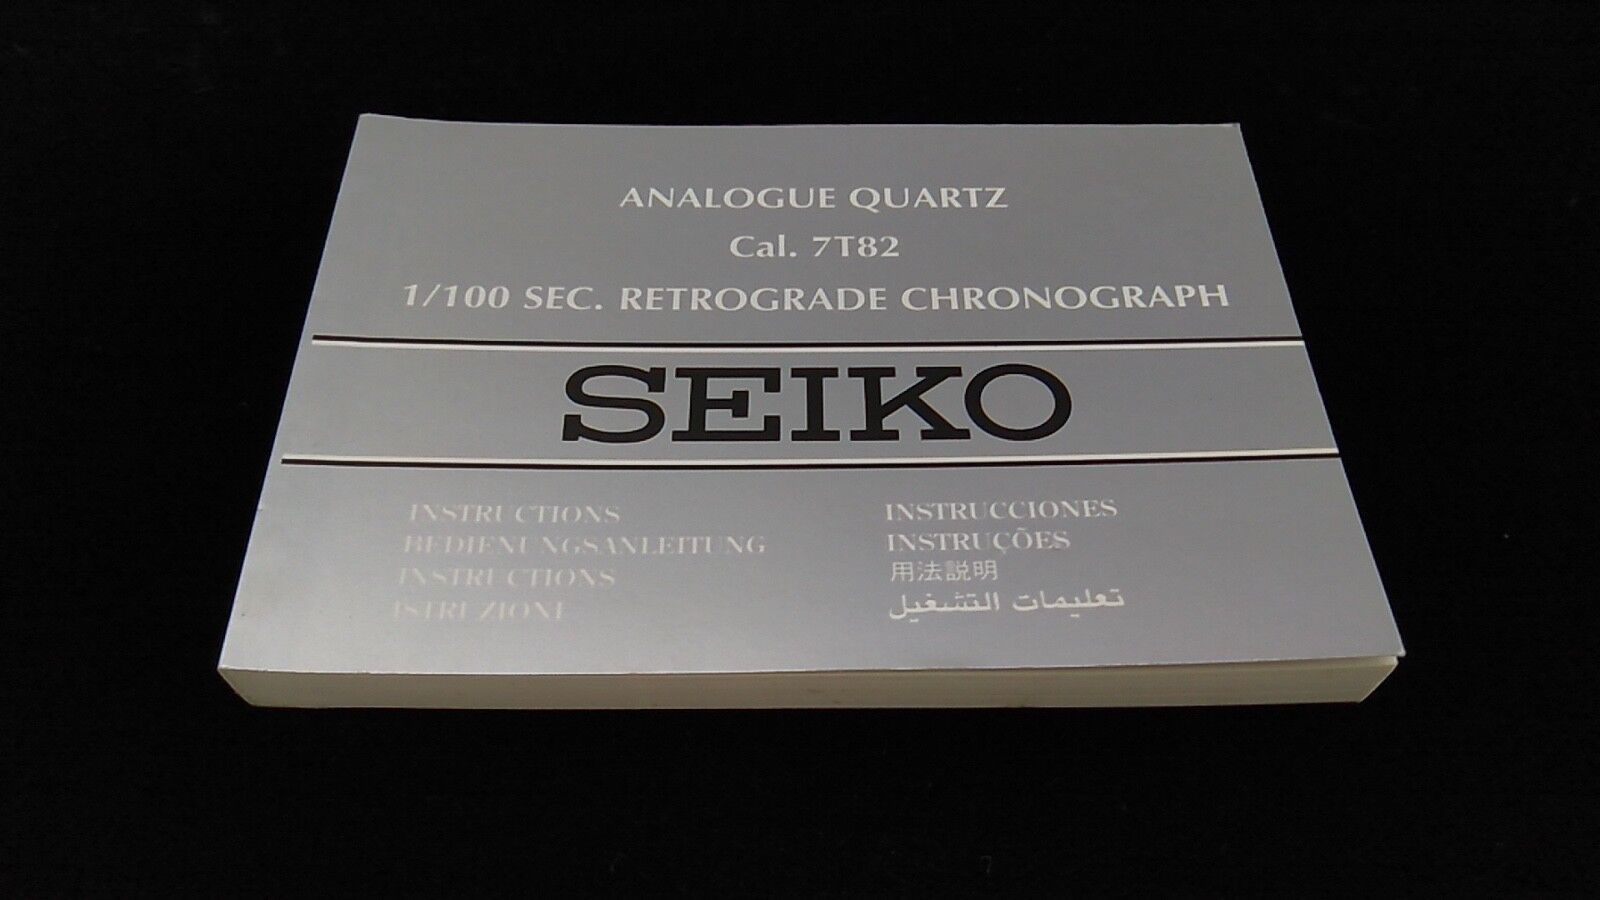 SEIKO Analogue Quartz Watch Manual Instructions Booklets   Chronograph | eBay